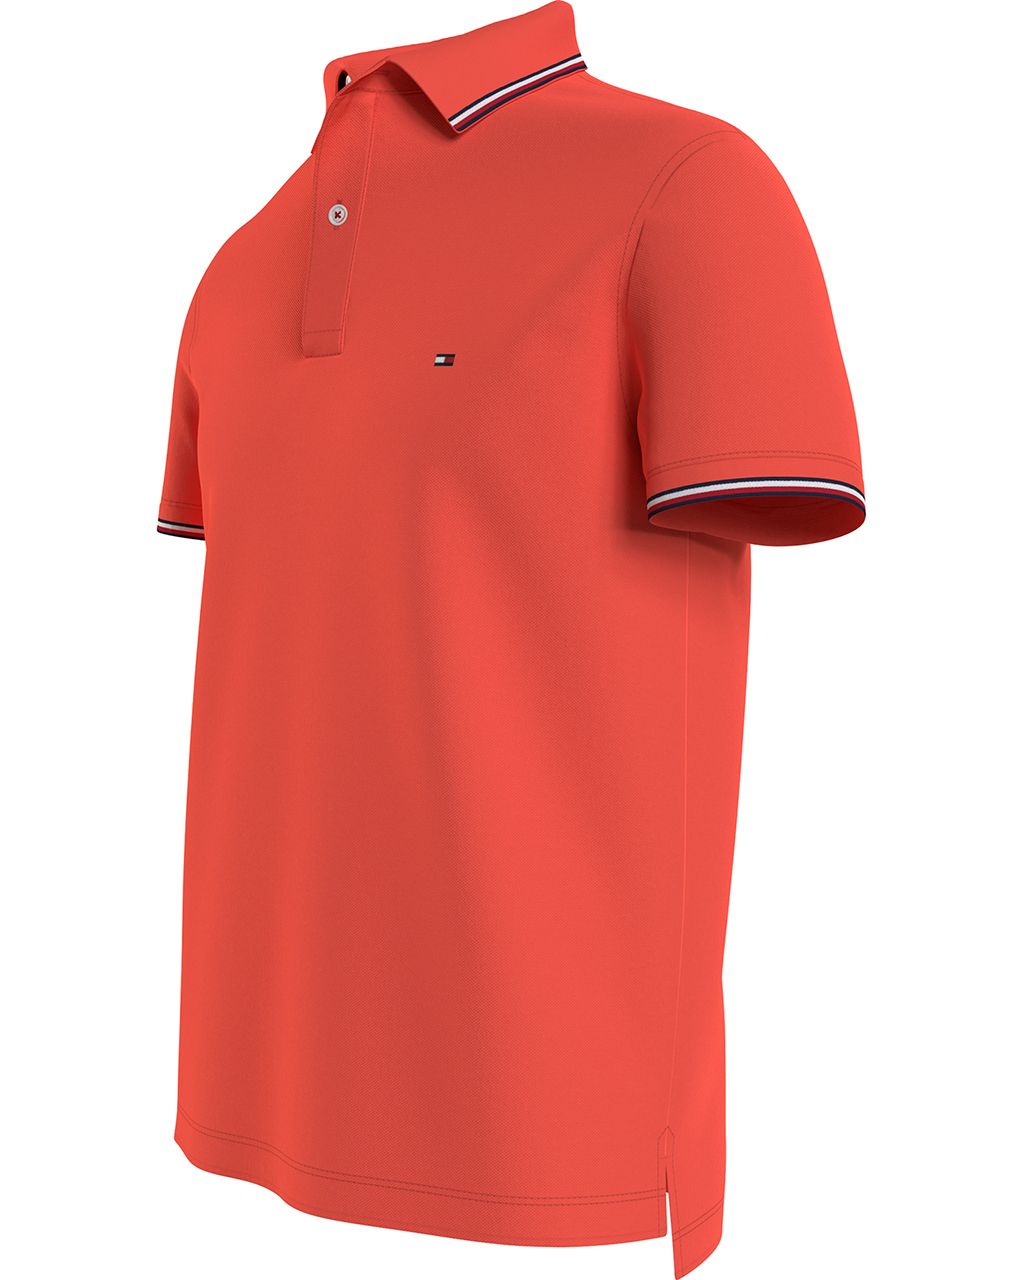 Tommy Hilfiger Menswear Polo KM Oranje 074963-001-L